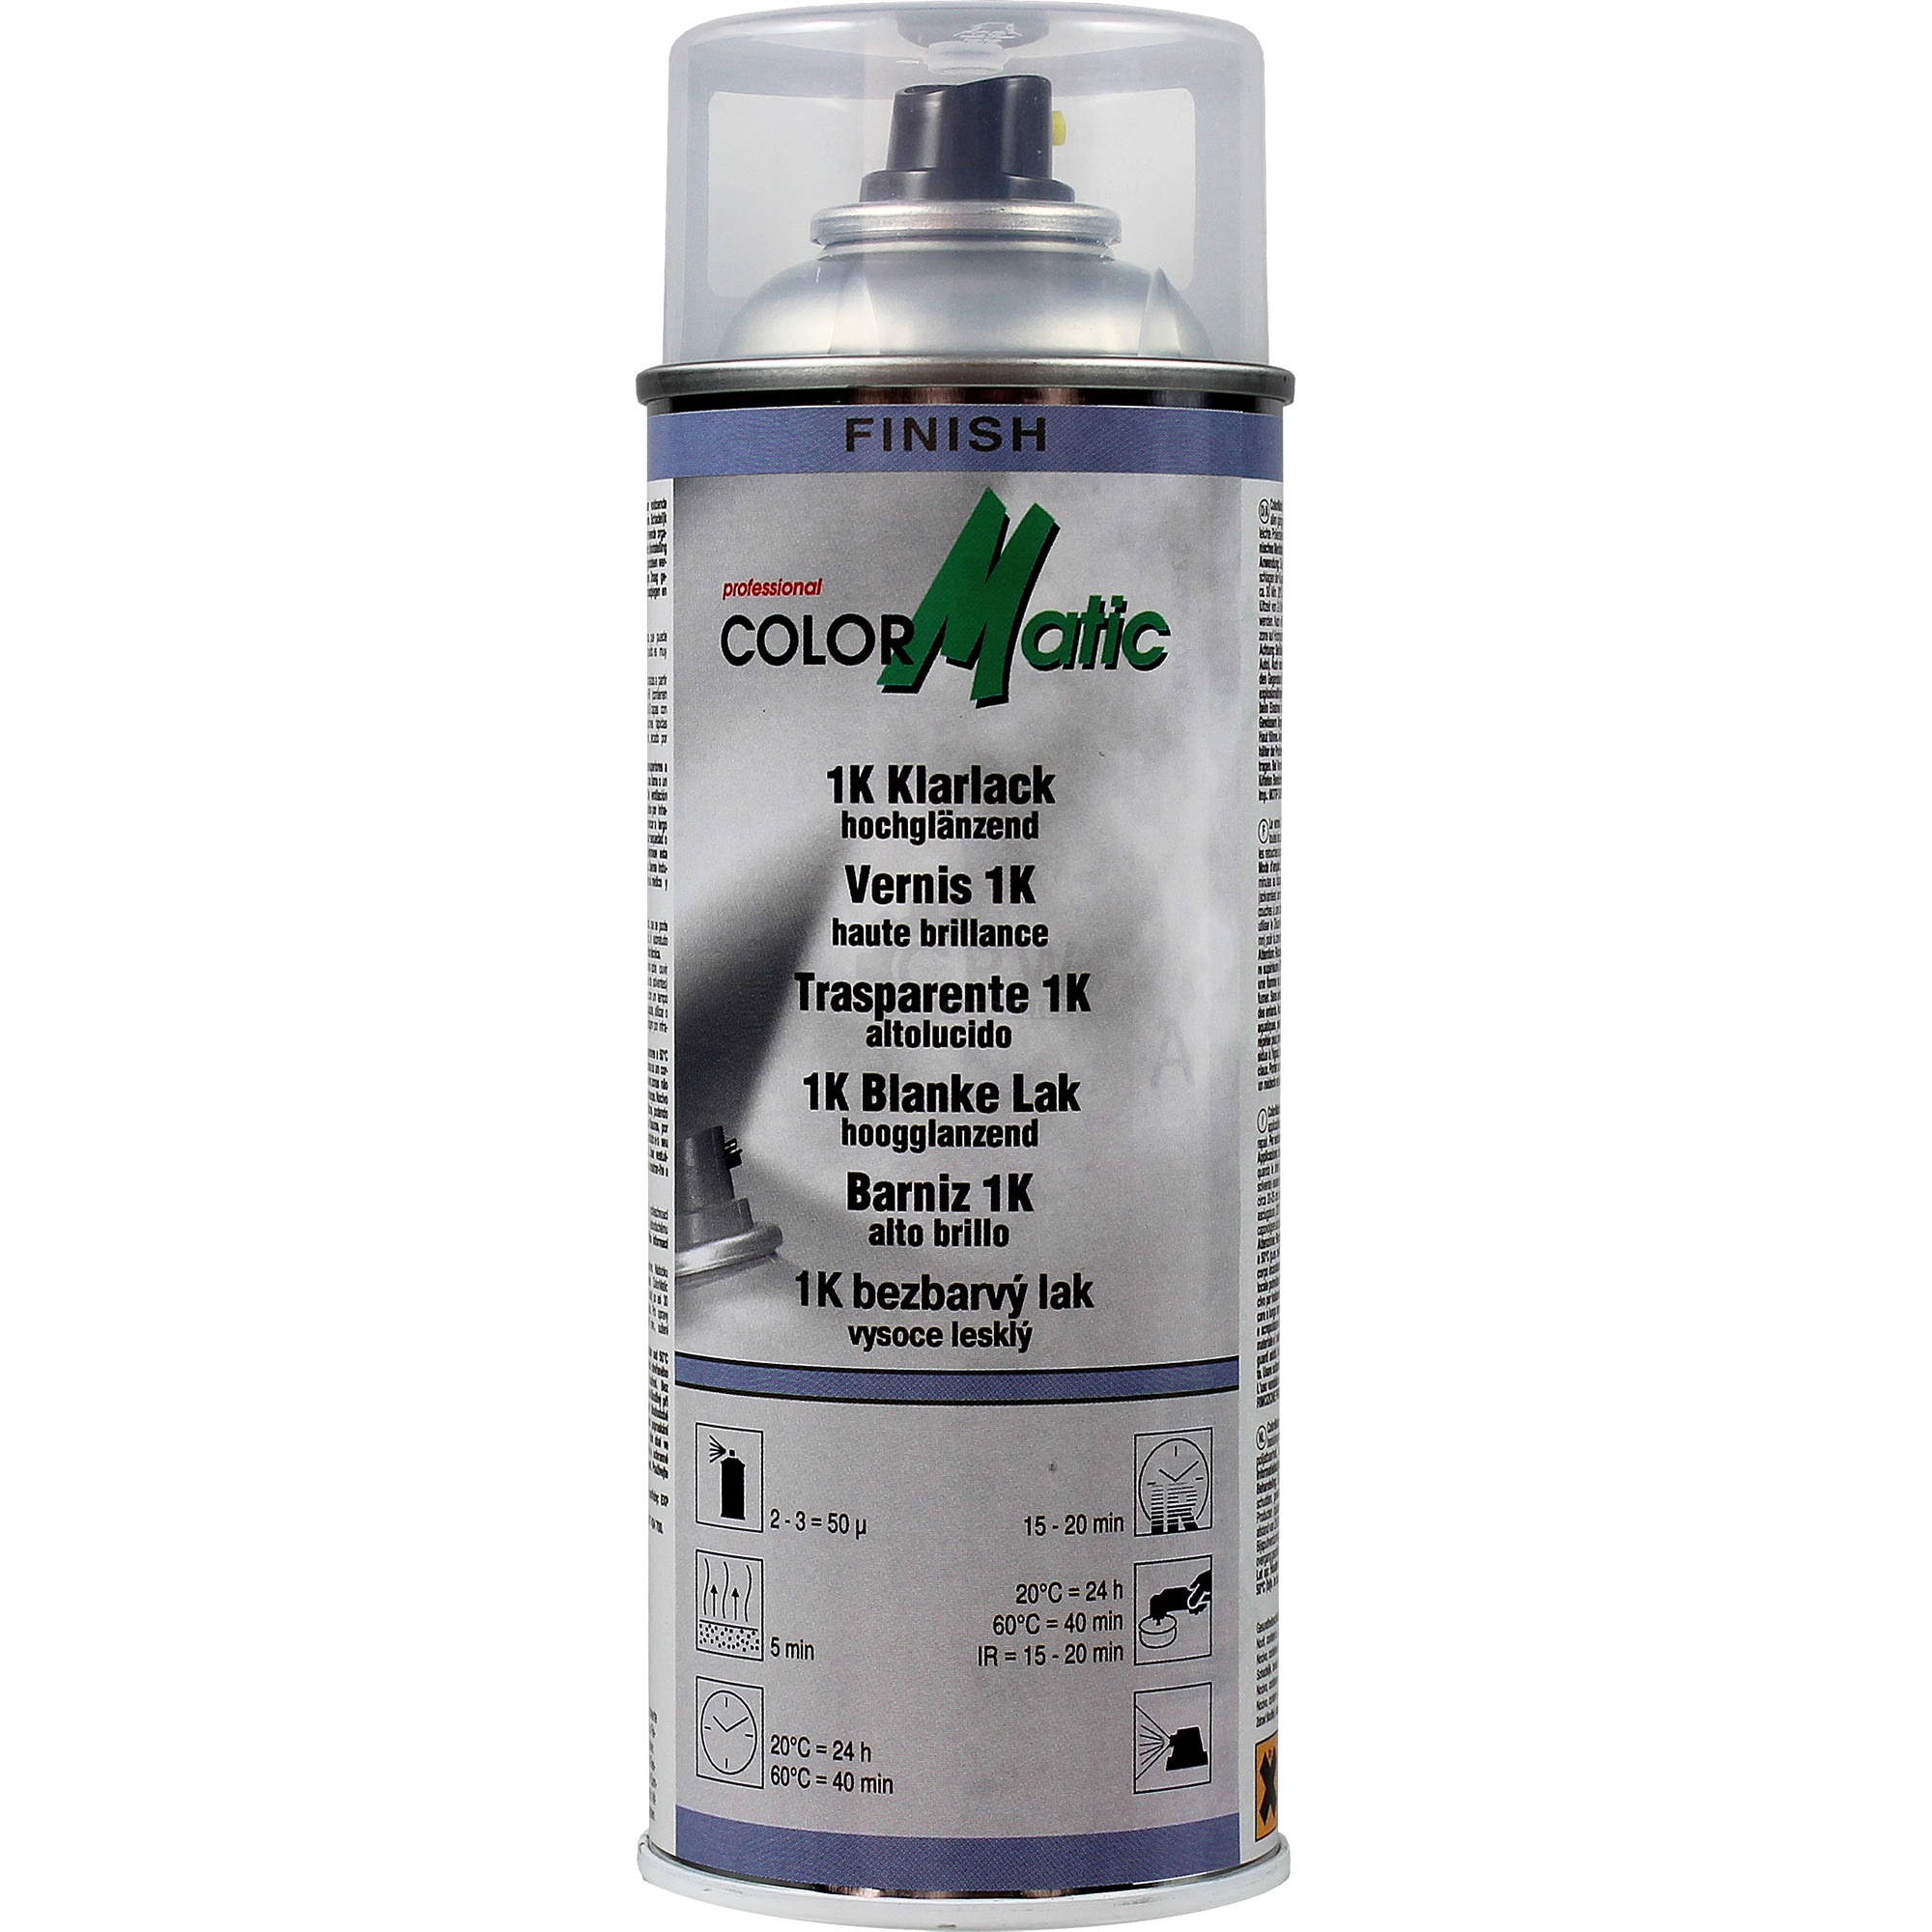 ColorMatic 1K Klarlack transparent Professional Finish Hochglanz Spraydose 400ml